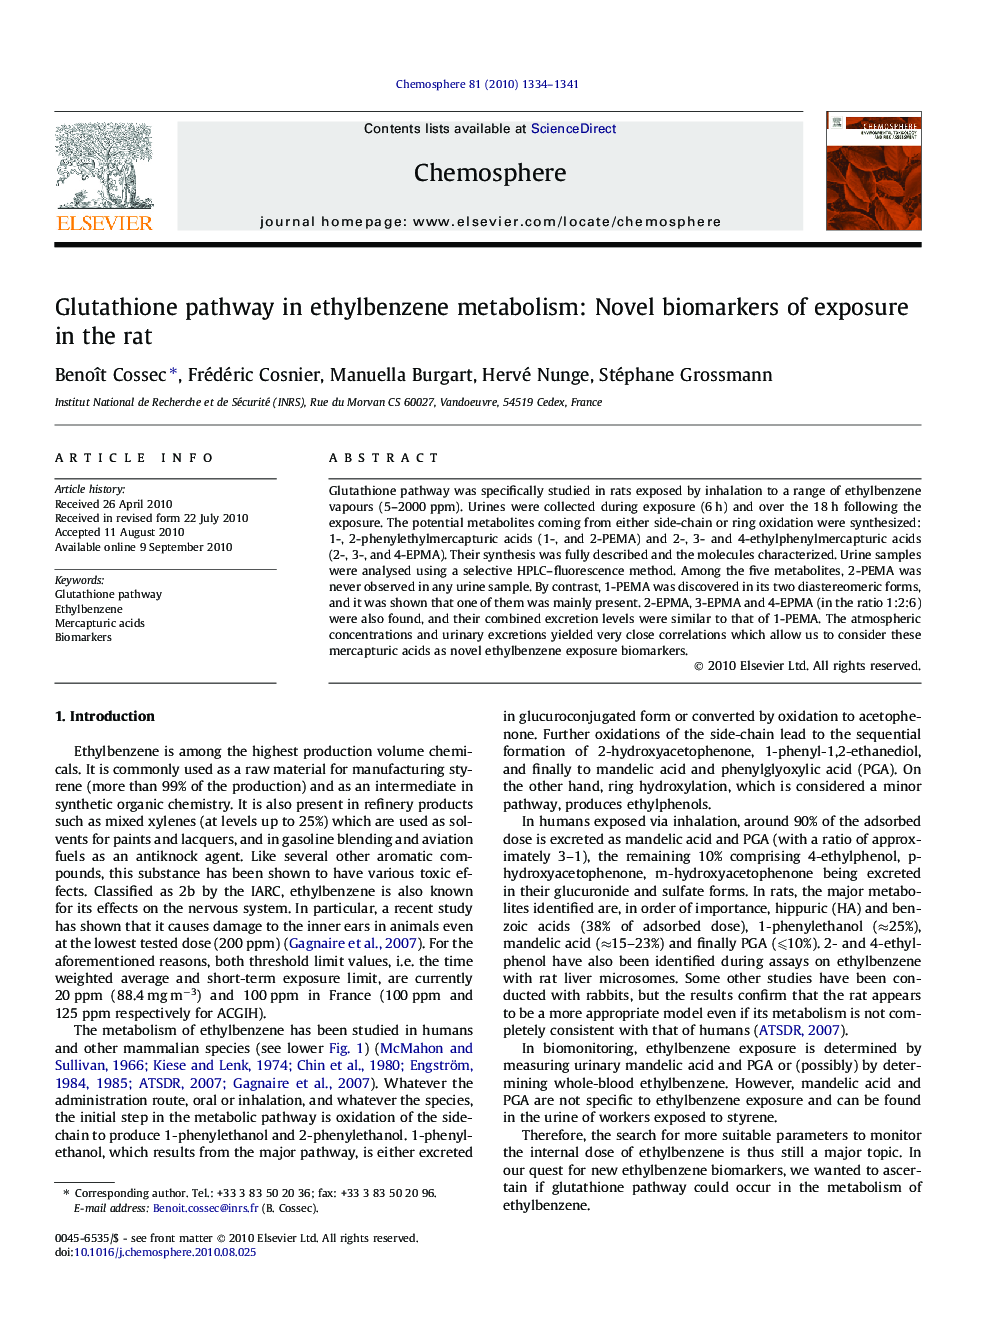 Glutathione pathway in ethylbenzene metabolism: Novel biomarkers of exposure in the rat